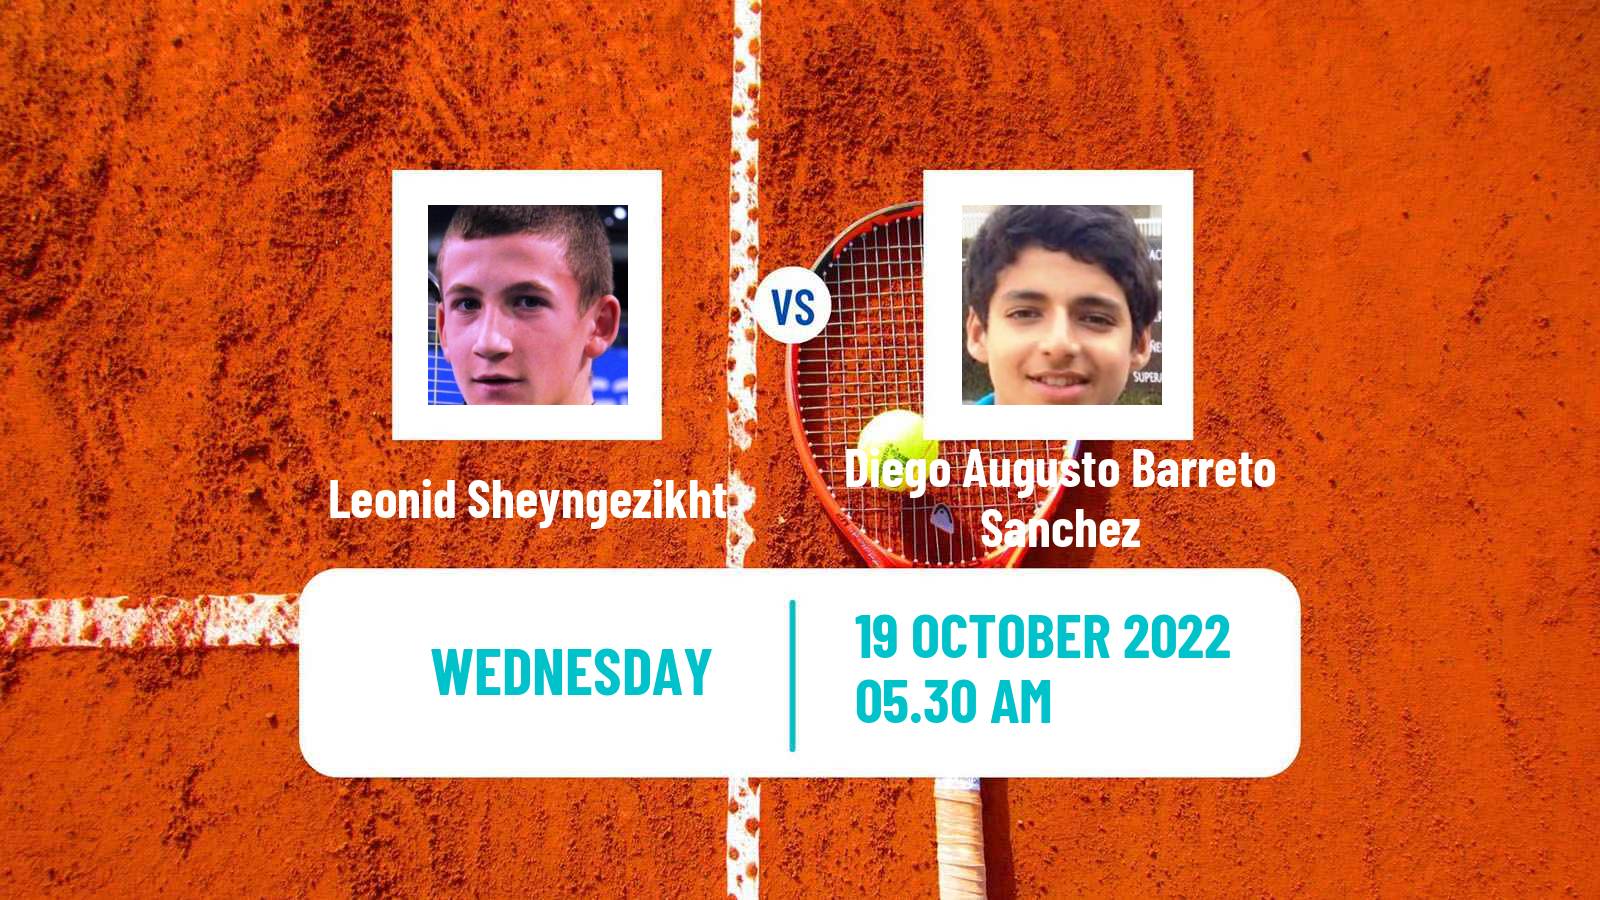 Tennis ITF Tournaments Leonid Sheyngezikht - Diego Augusto Barreto Sanchez